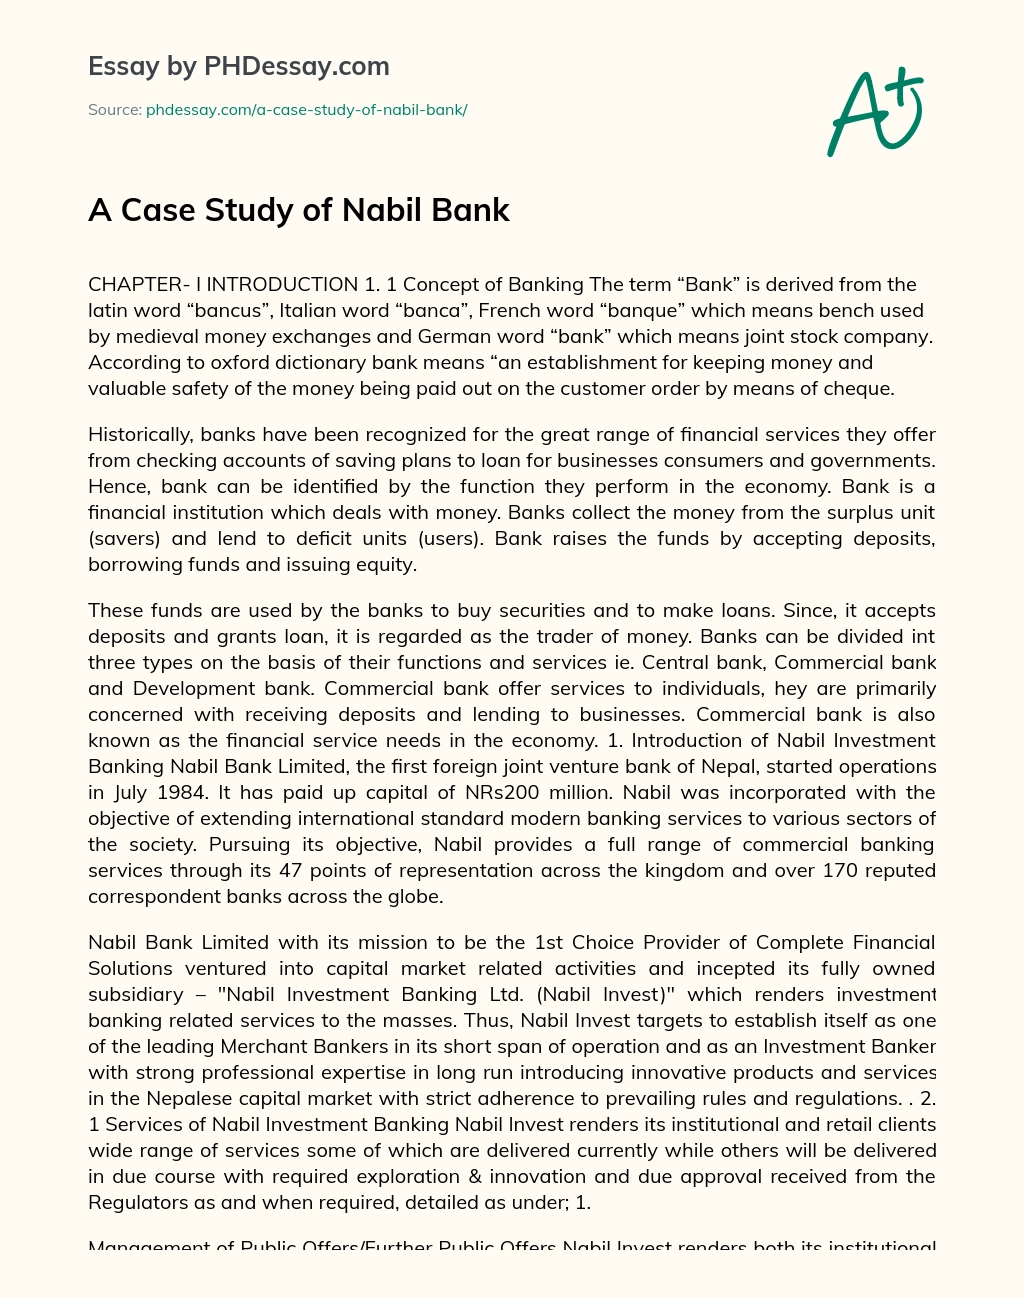 A Case Study of Nabil Bank essay